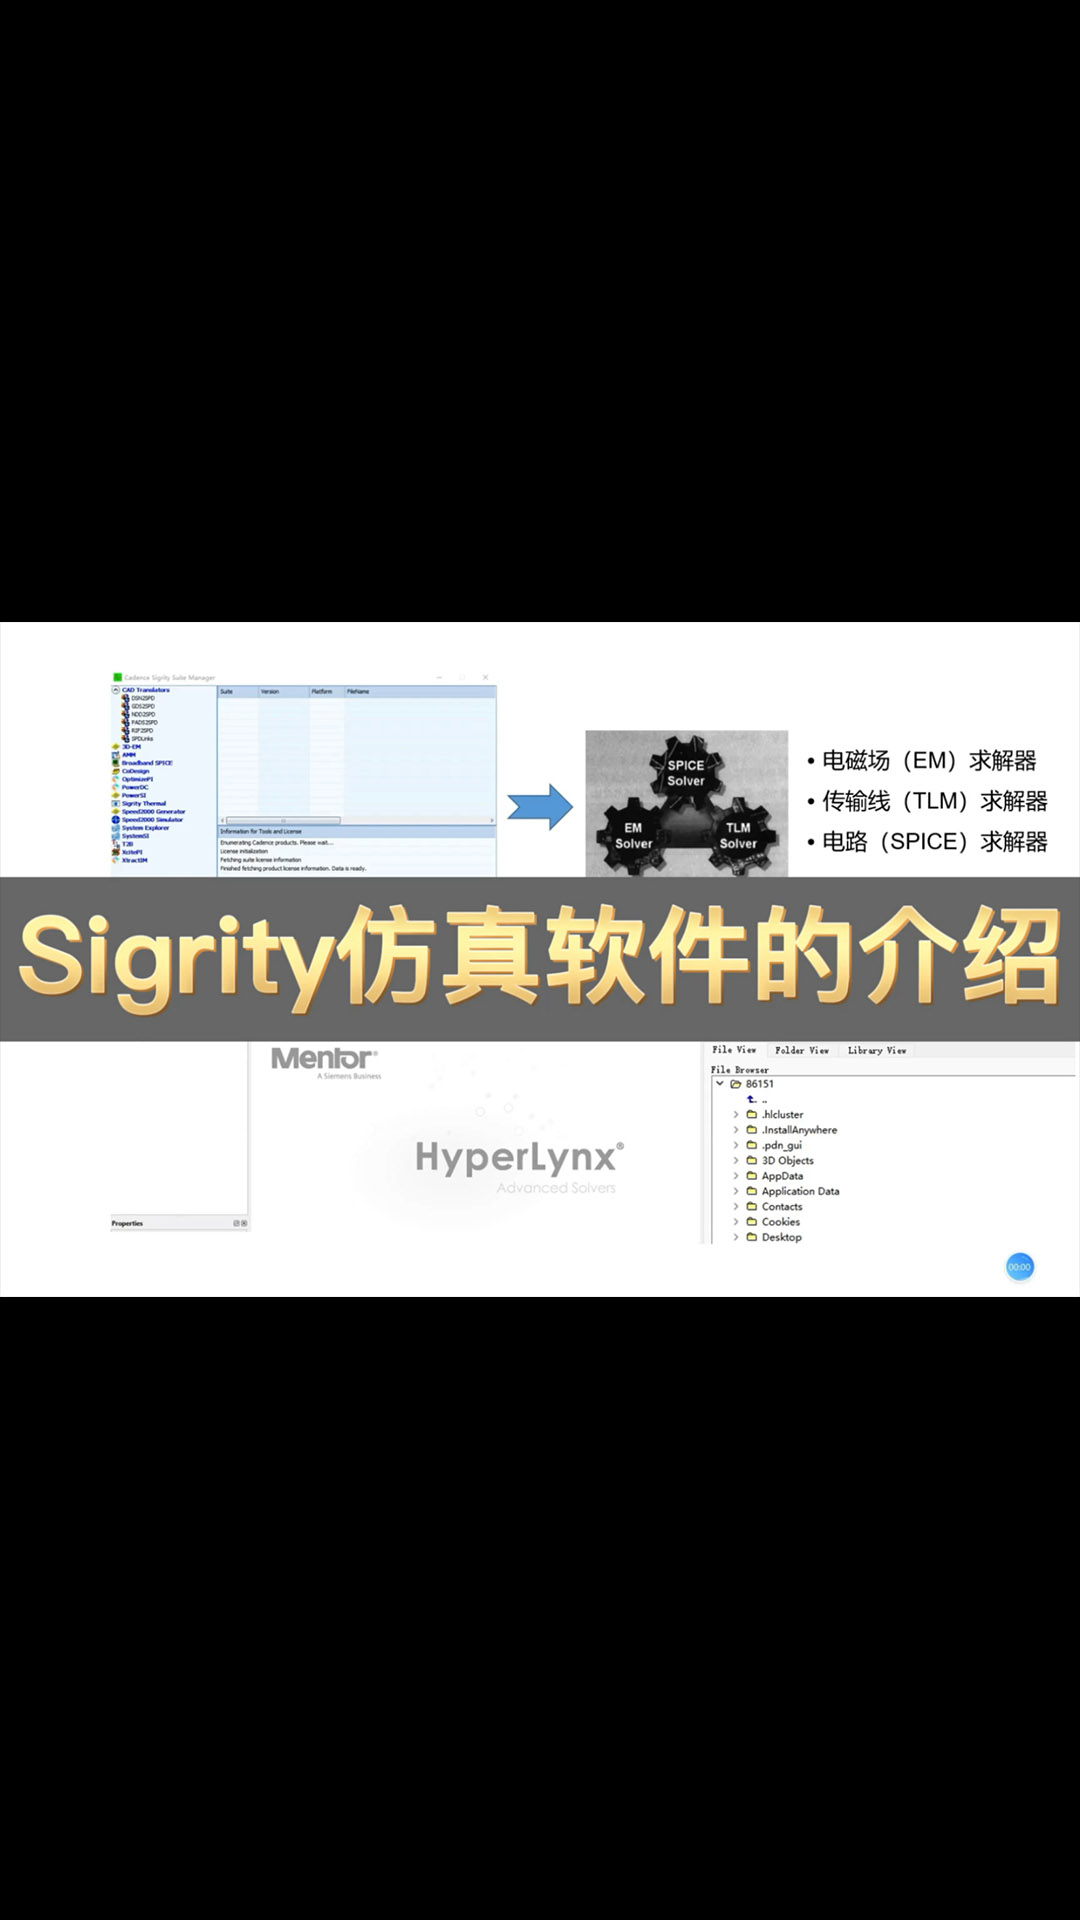 Sigrity仿真软件的介绍